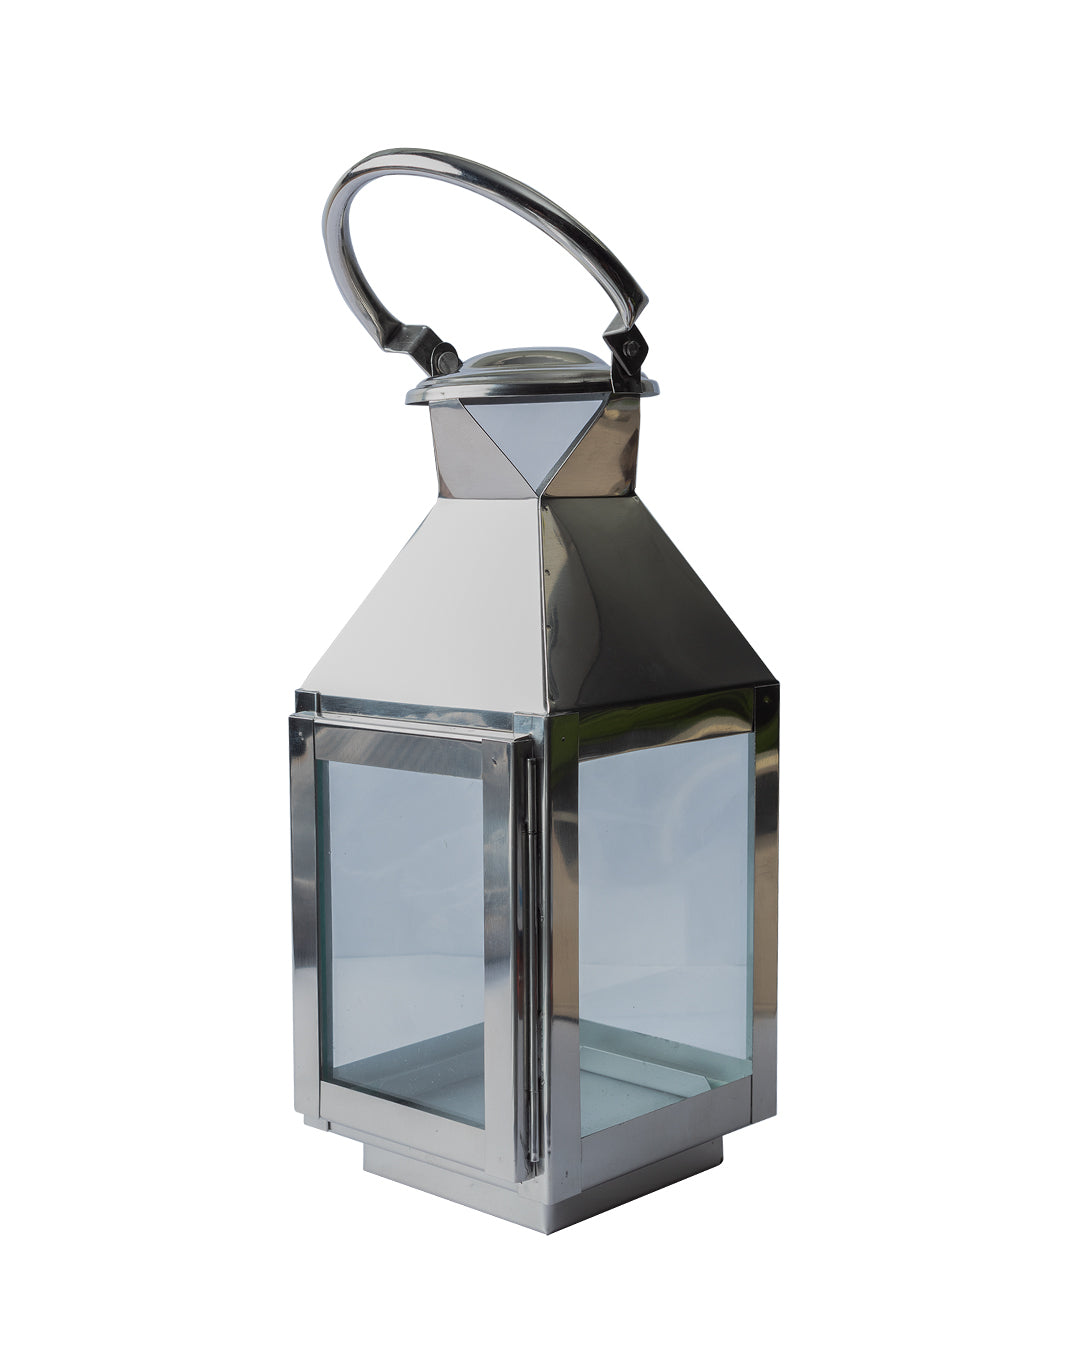 VON CASA Table Lantern, Small, Silver, Stainless Steel & Glass